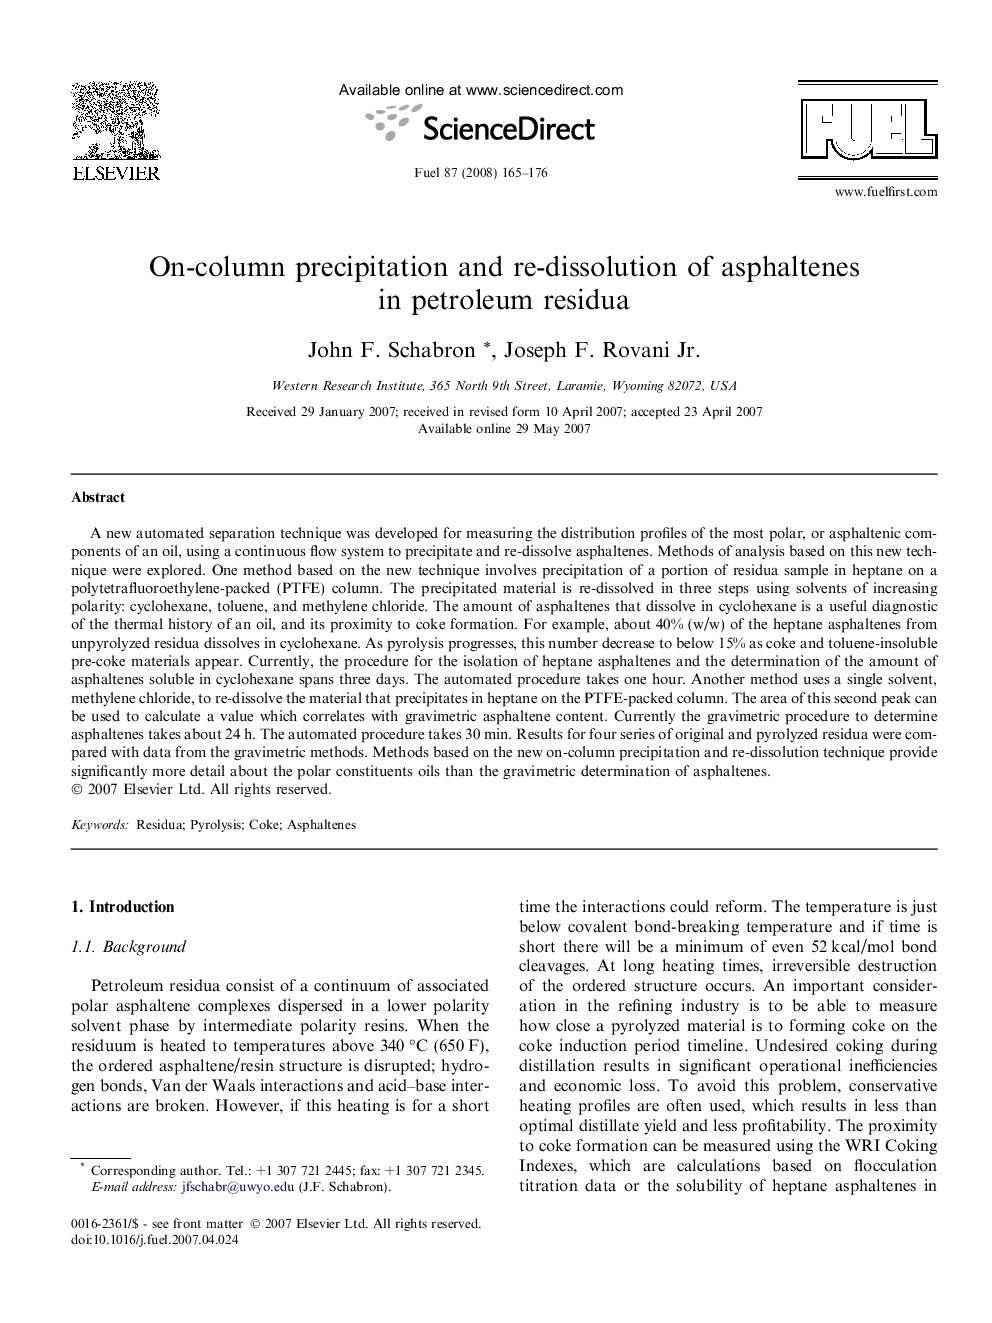 On-column precipitation and re-dissolution of asphaltenes in petroleum residua